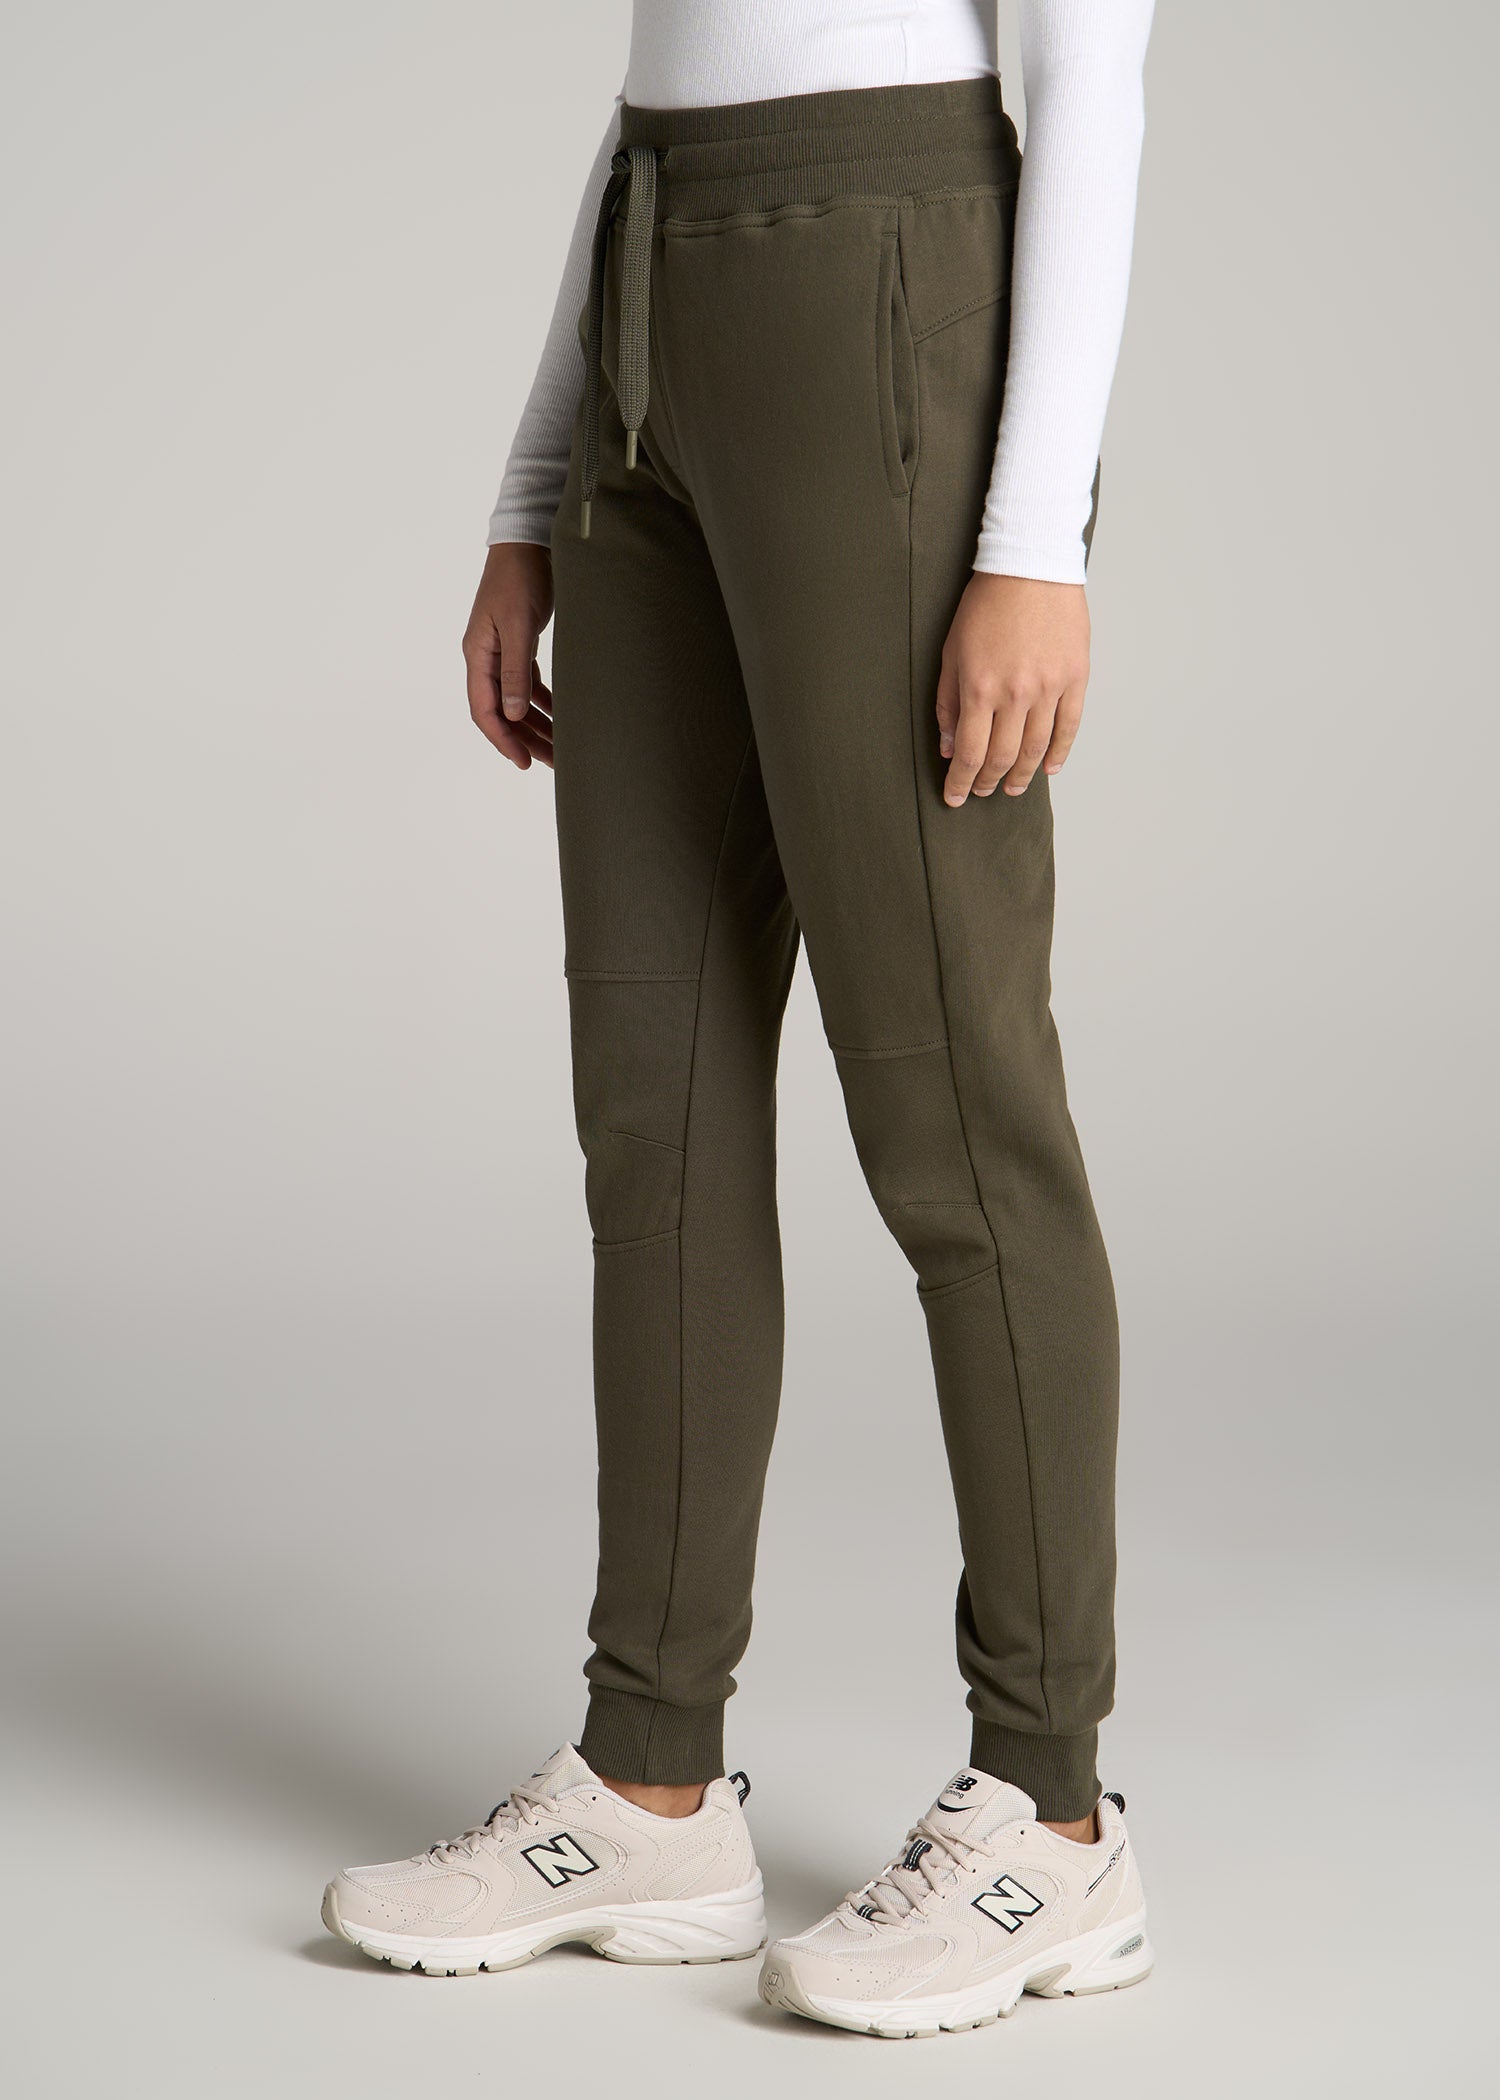 Buy Women's Capri Sweatpants Jogger Lounge Sweat Pants Cotton